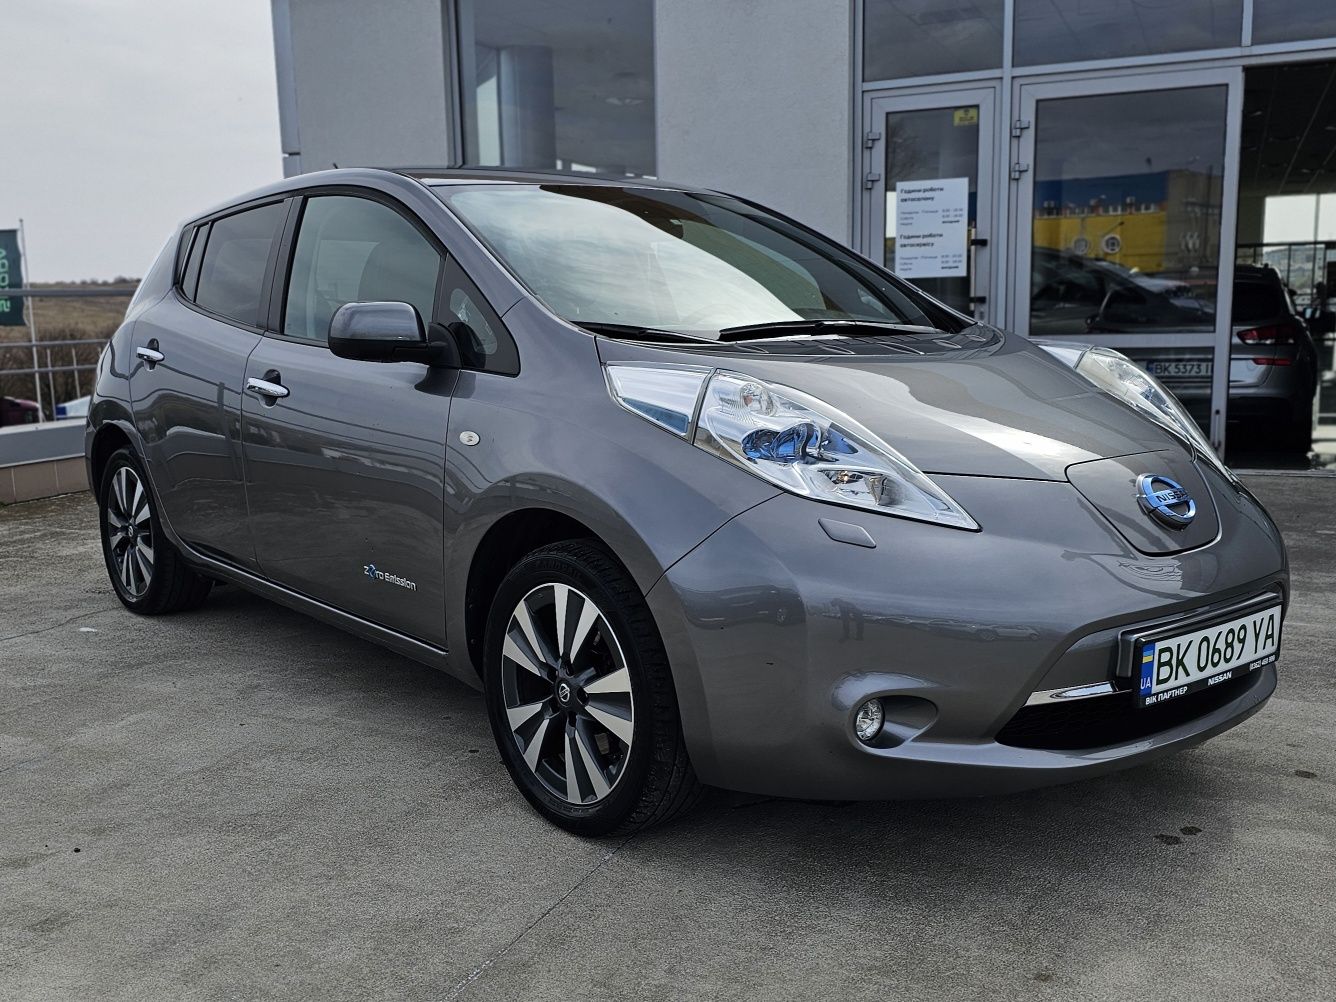 Nissan leaf 2014